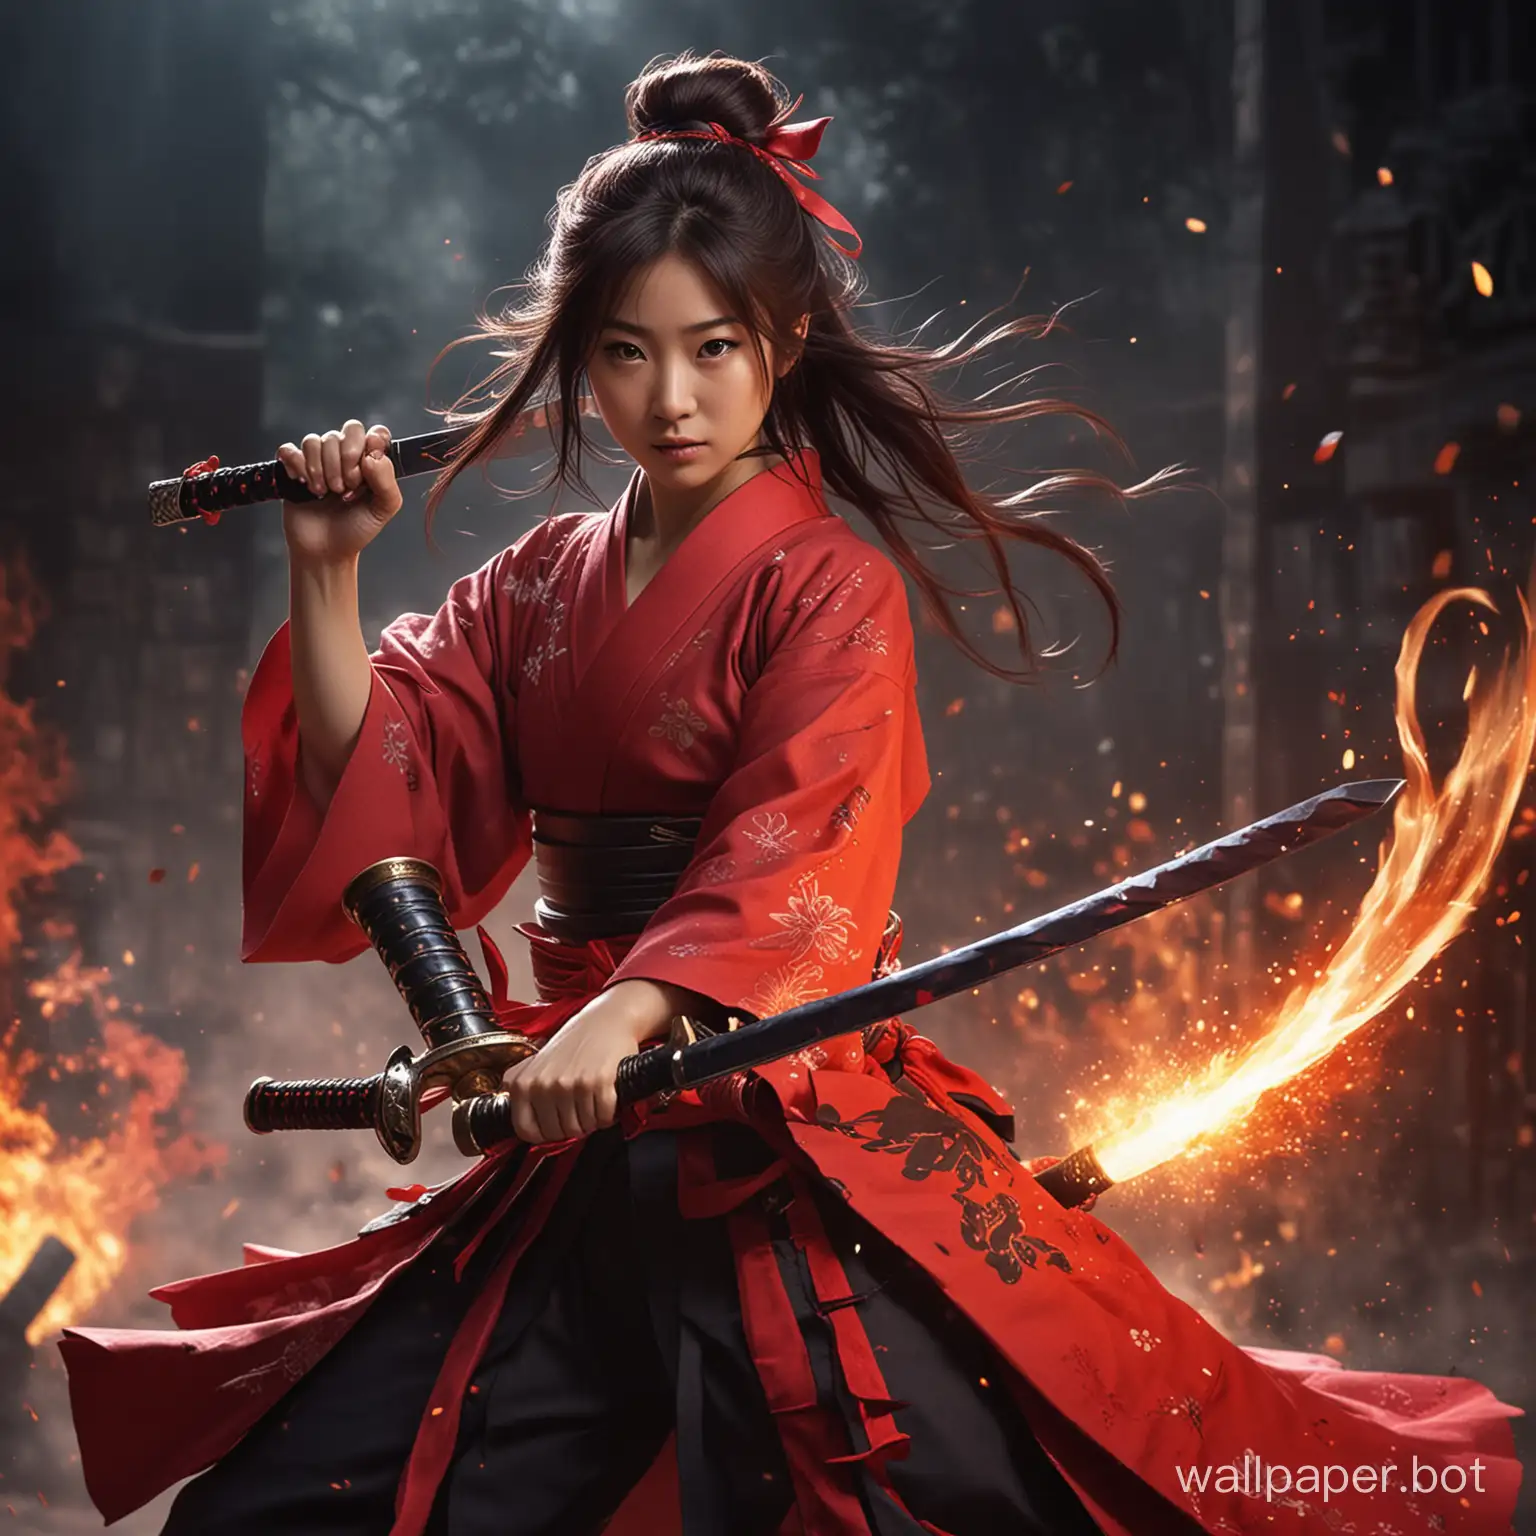 Cute-Samurai-Girl-Kyoko-Fukada-Battles-Fiery-Dragon-in-Red-Samurai-Armor